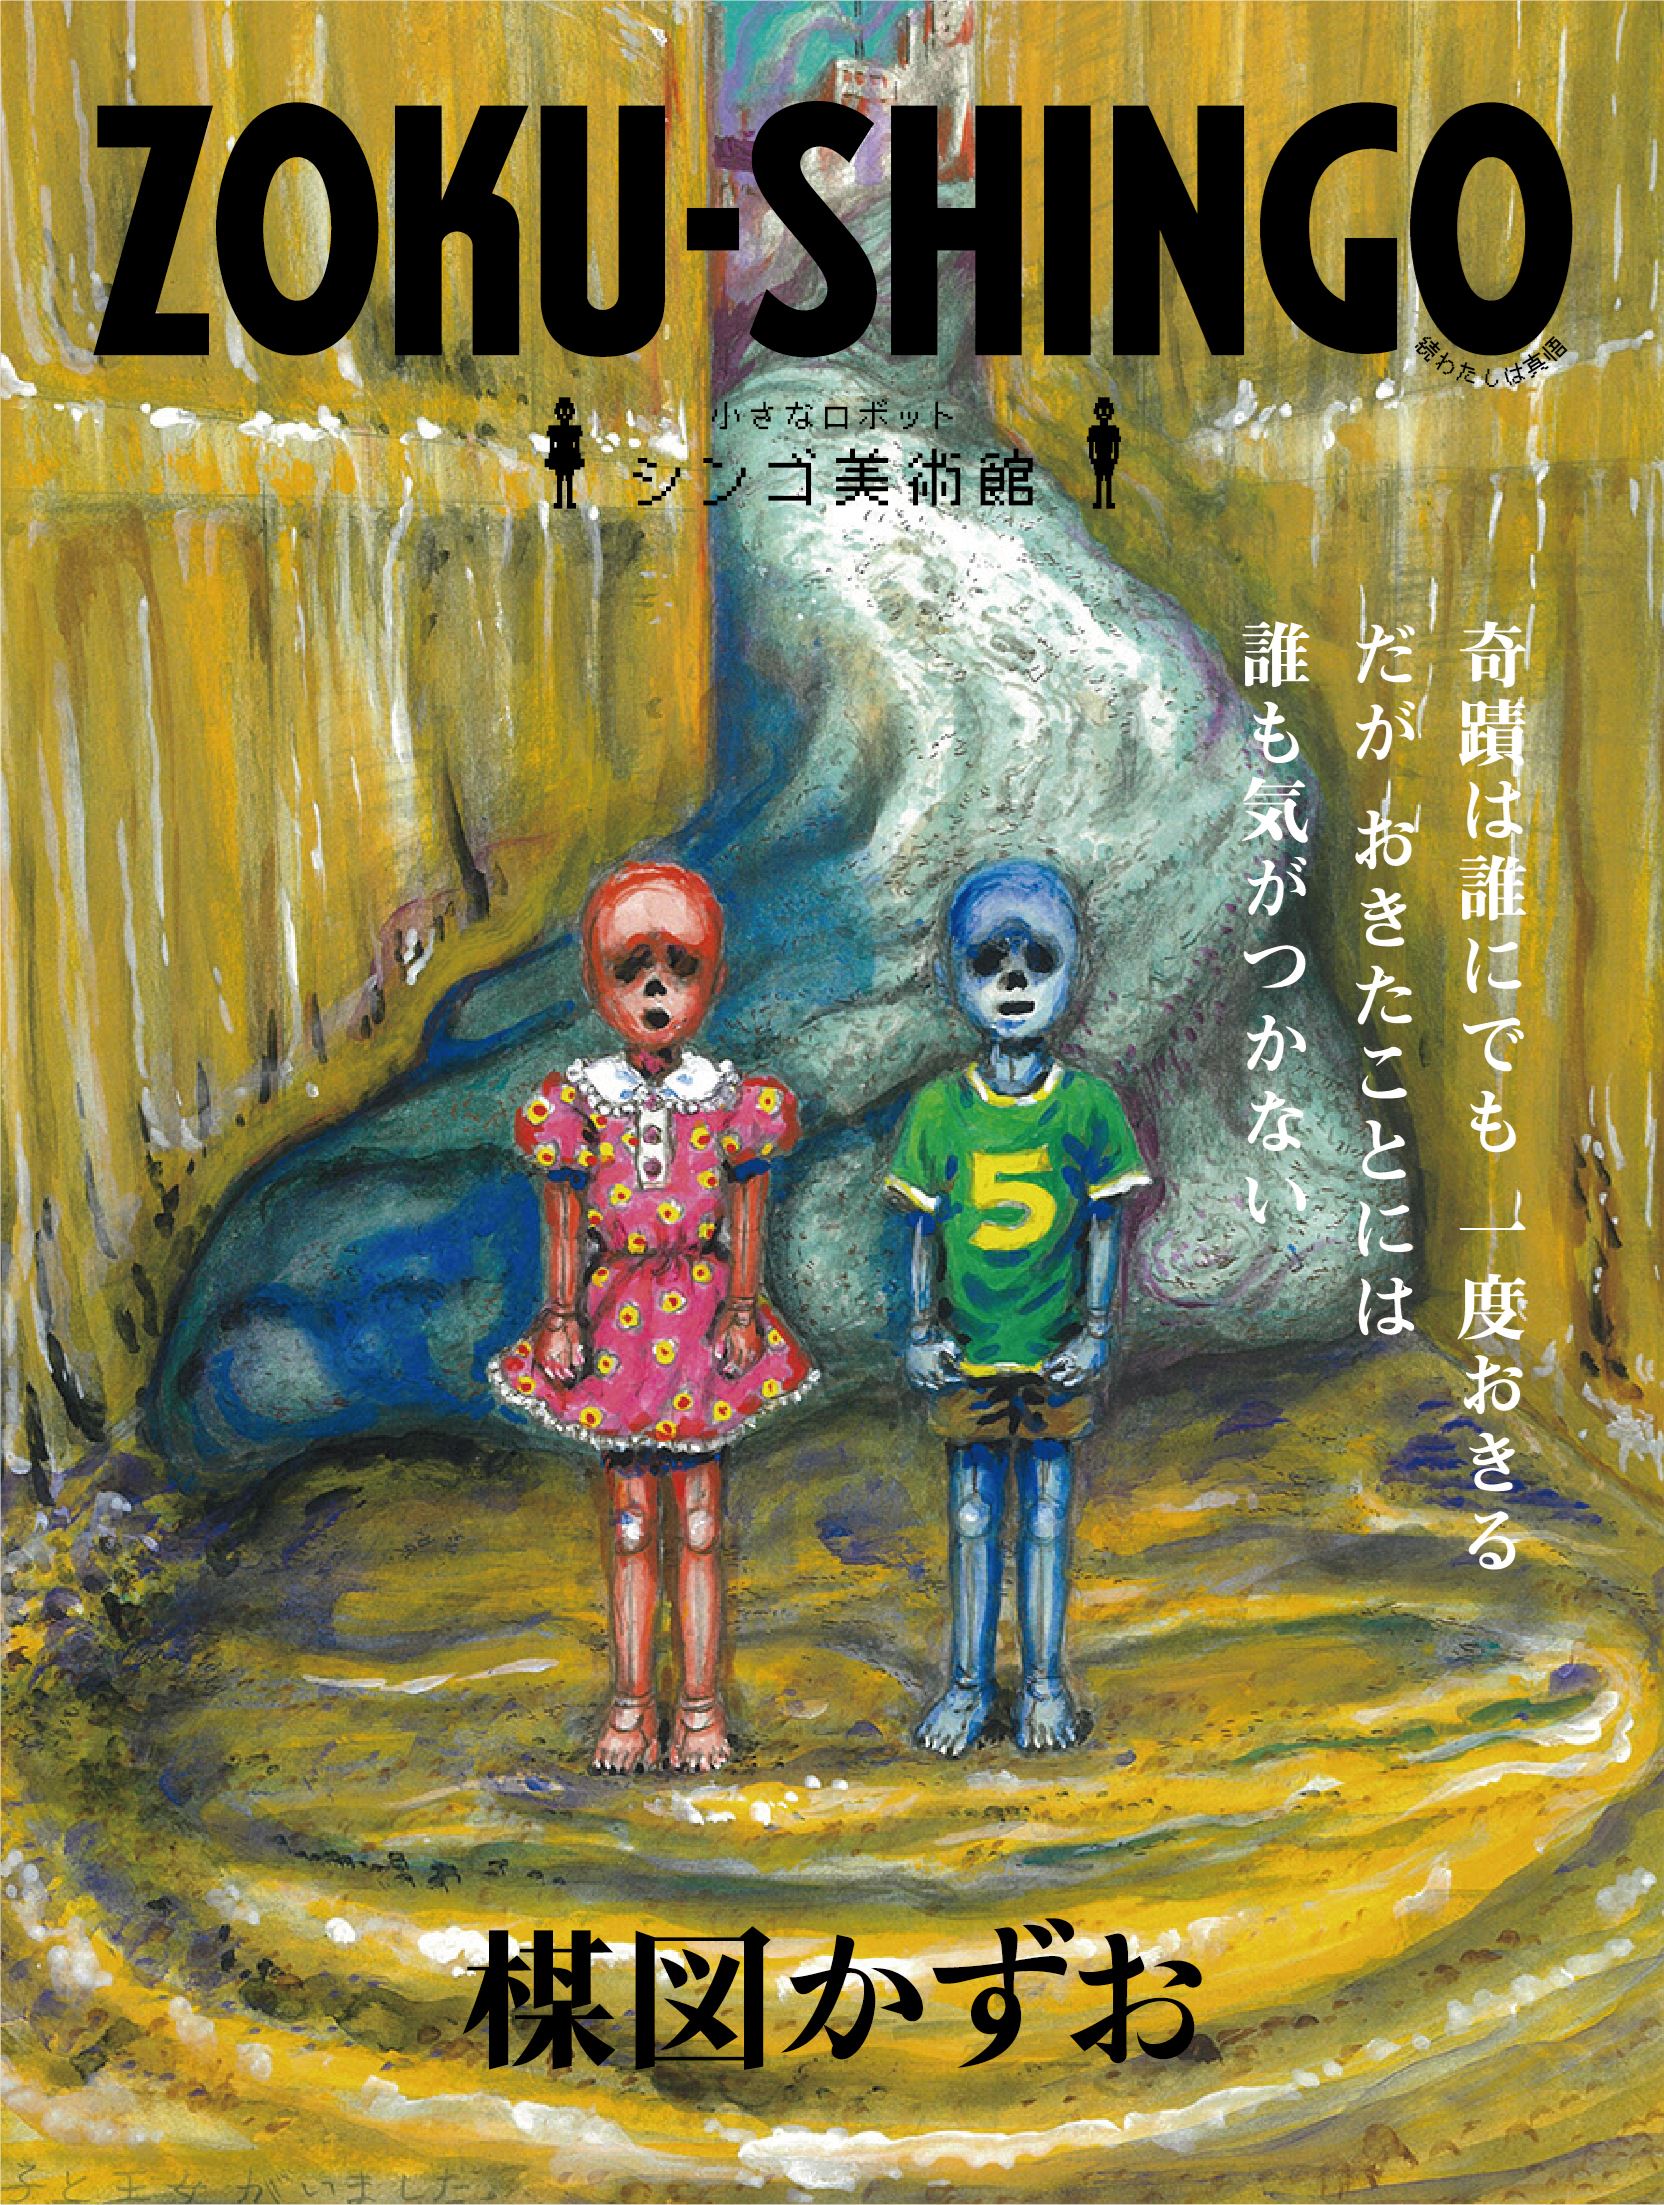 「ZOKU-SHINGO 小さなロボット シンゴ美術館」 (c)楳図かずお